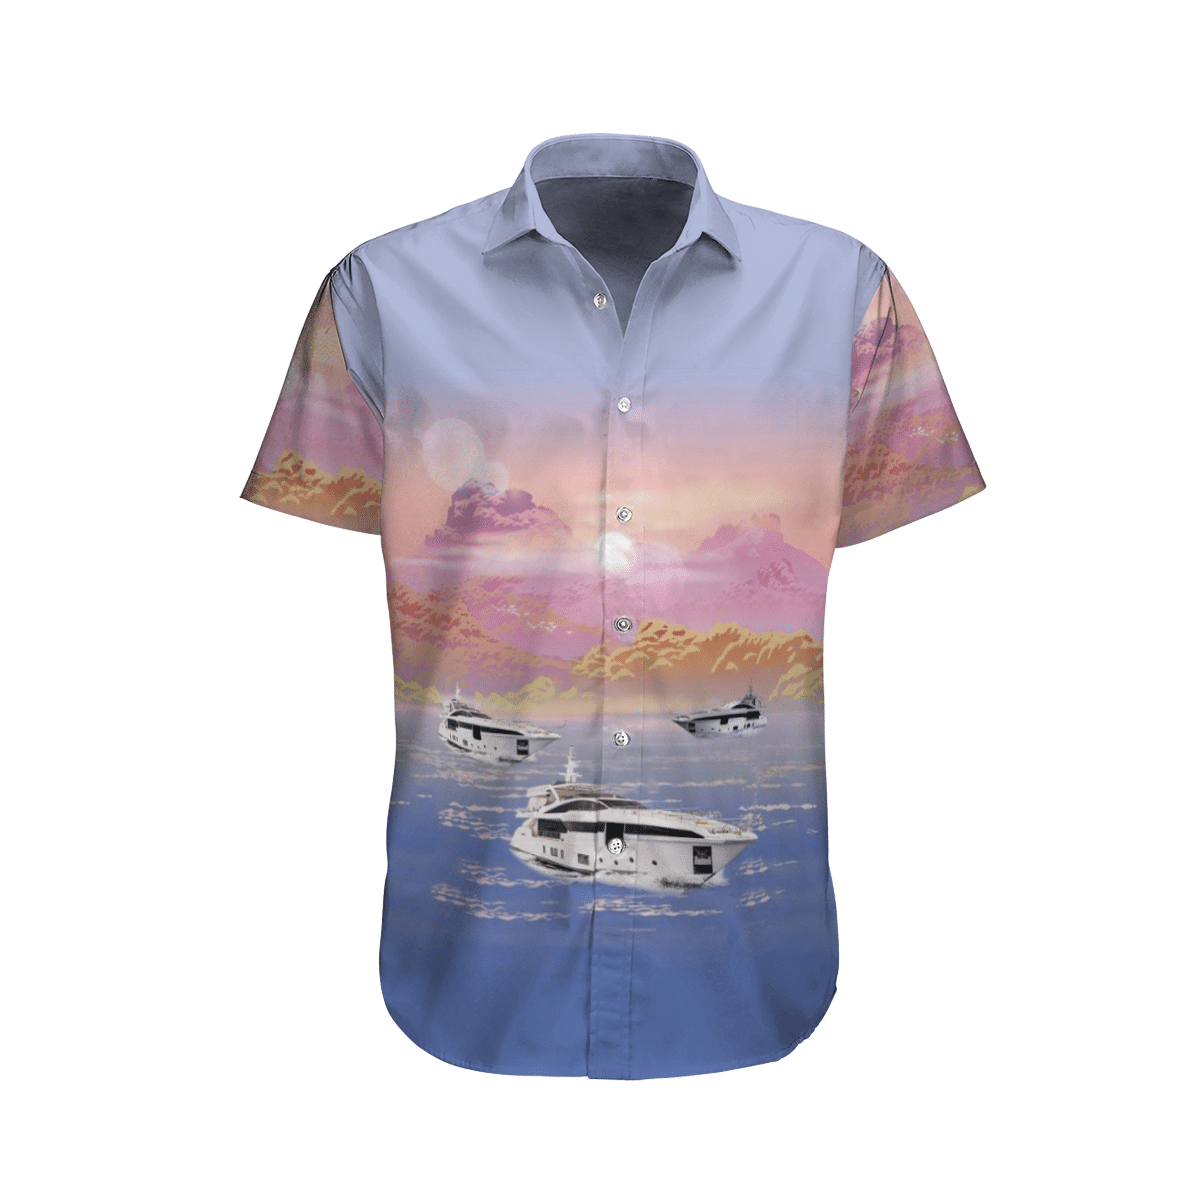 Get a new Hawaiian shirt to enjoy summer vacation 13